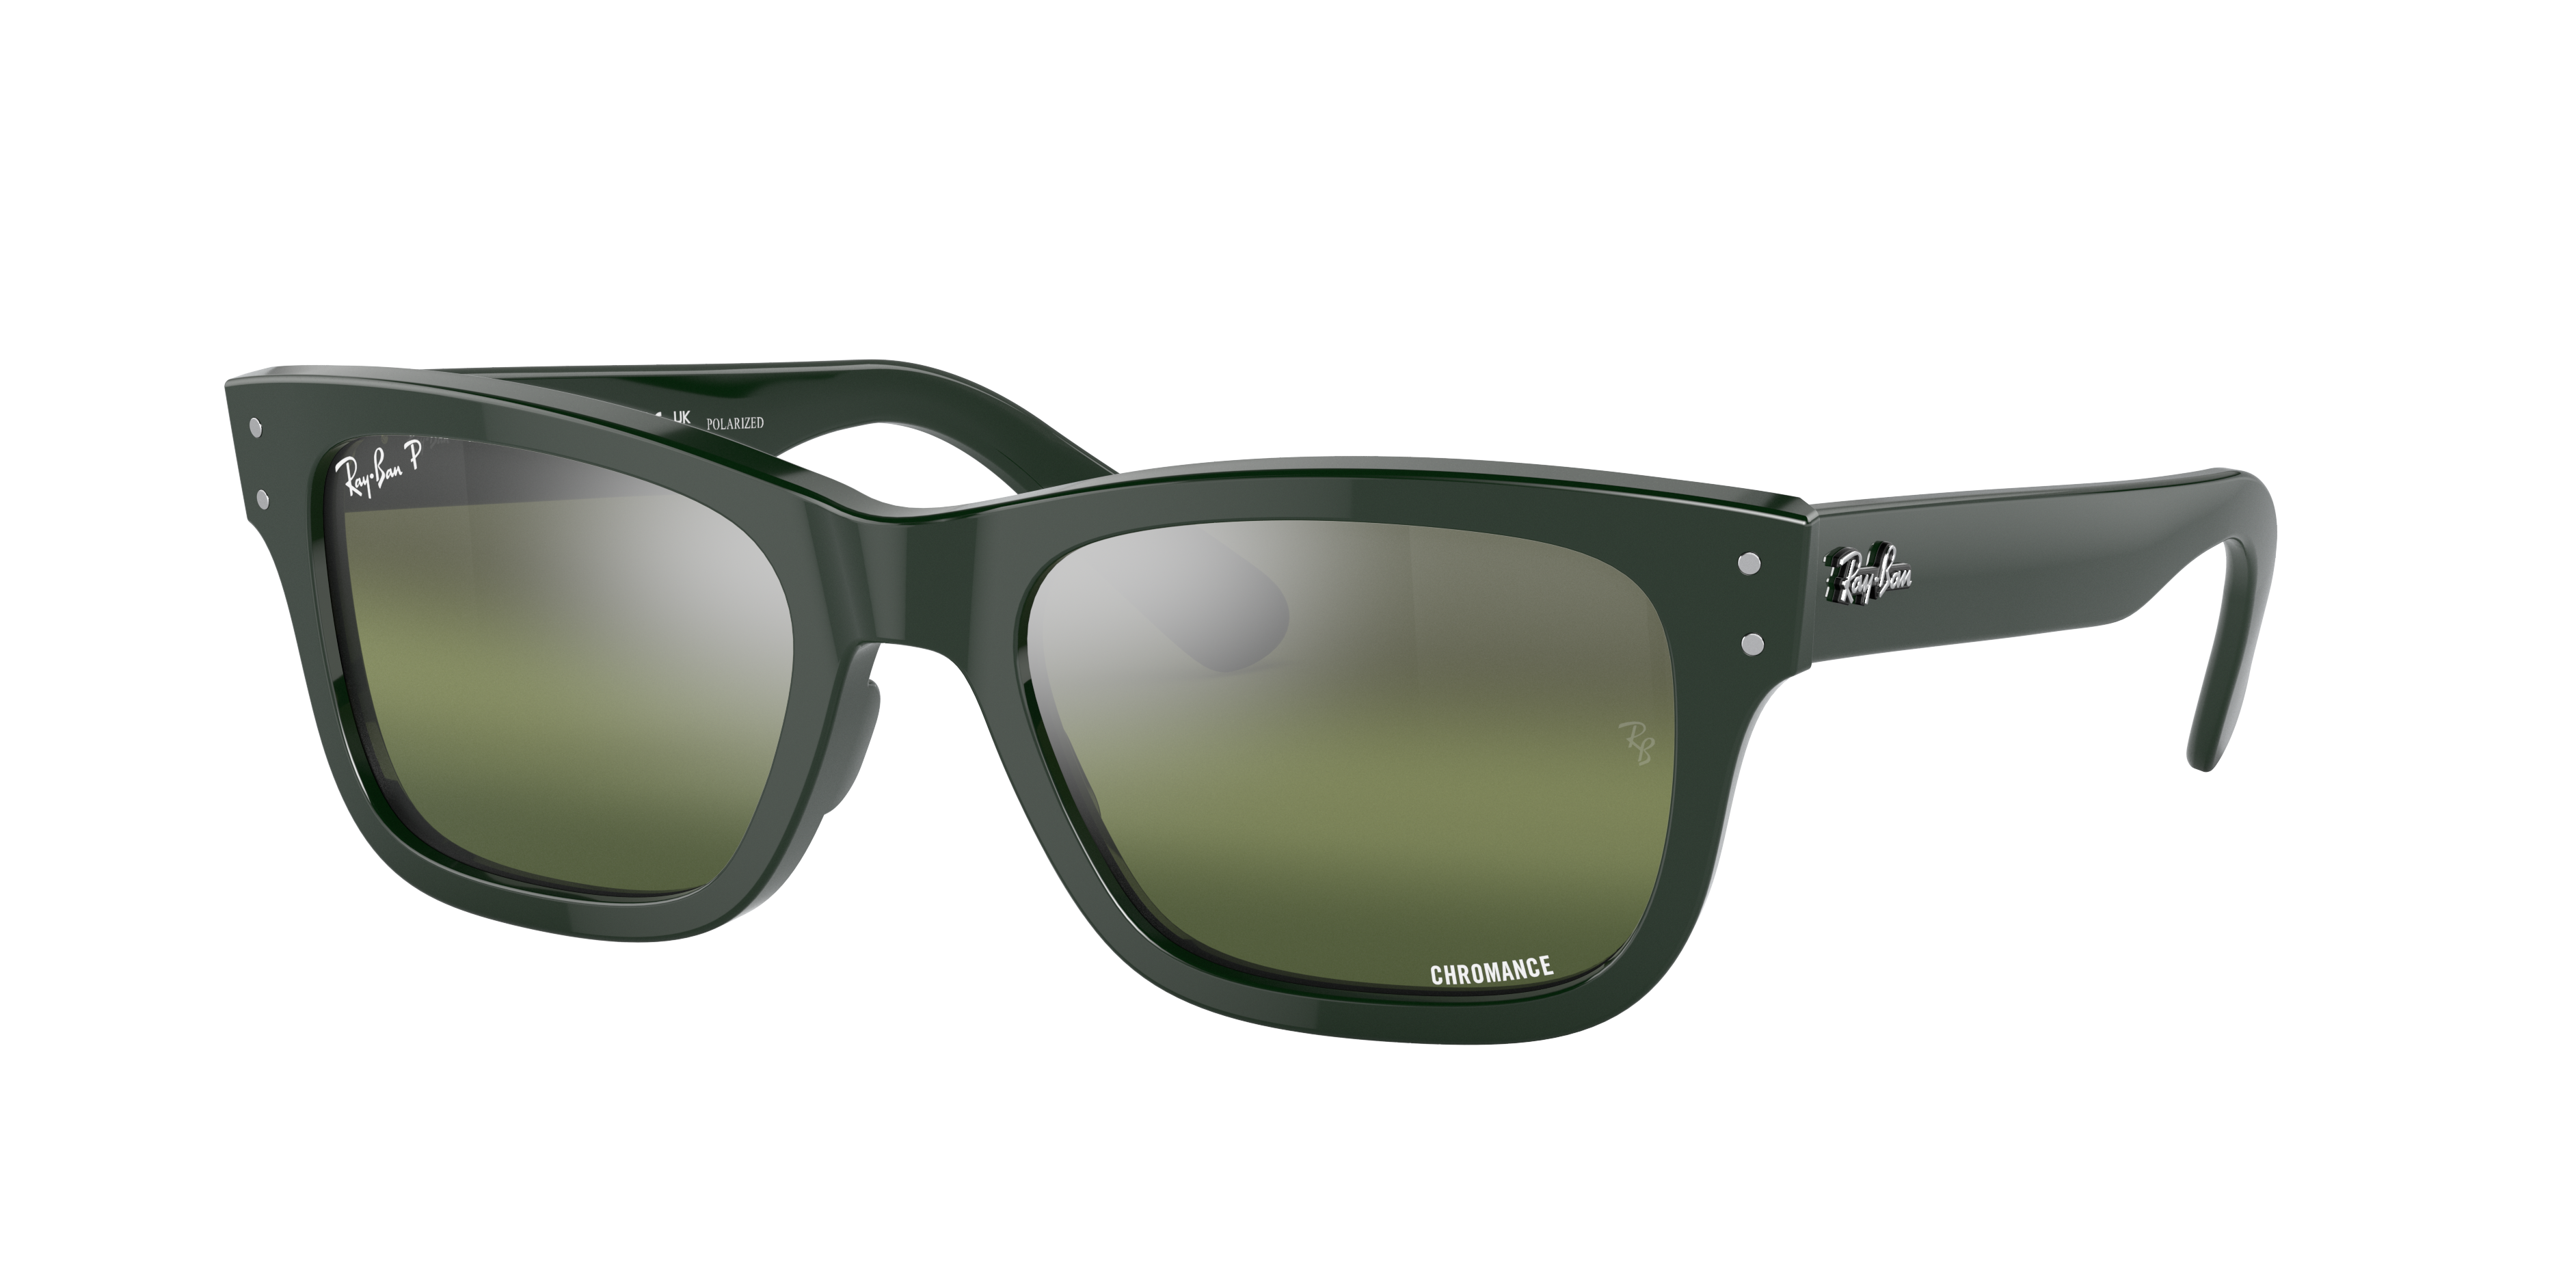 Save 24% Womens Sunglasses Ray-Ban Sunglasses Ray-Ban Burbank Sunglasses Frame Green Lenses Polarized in Black 